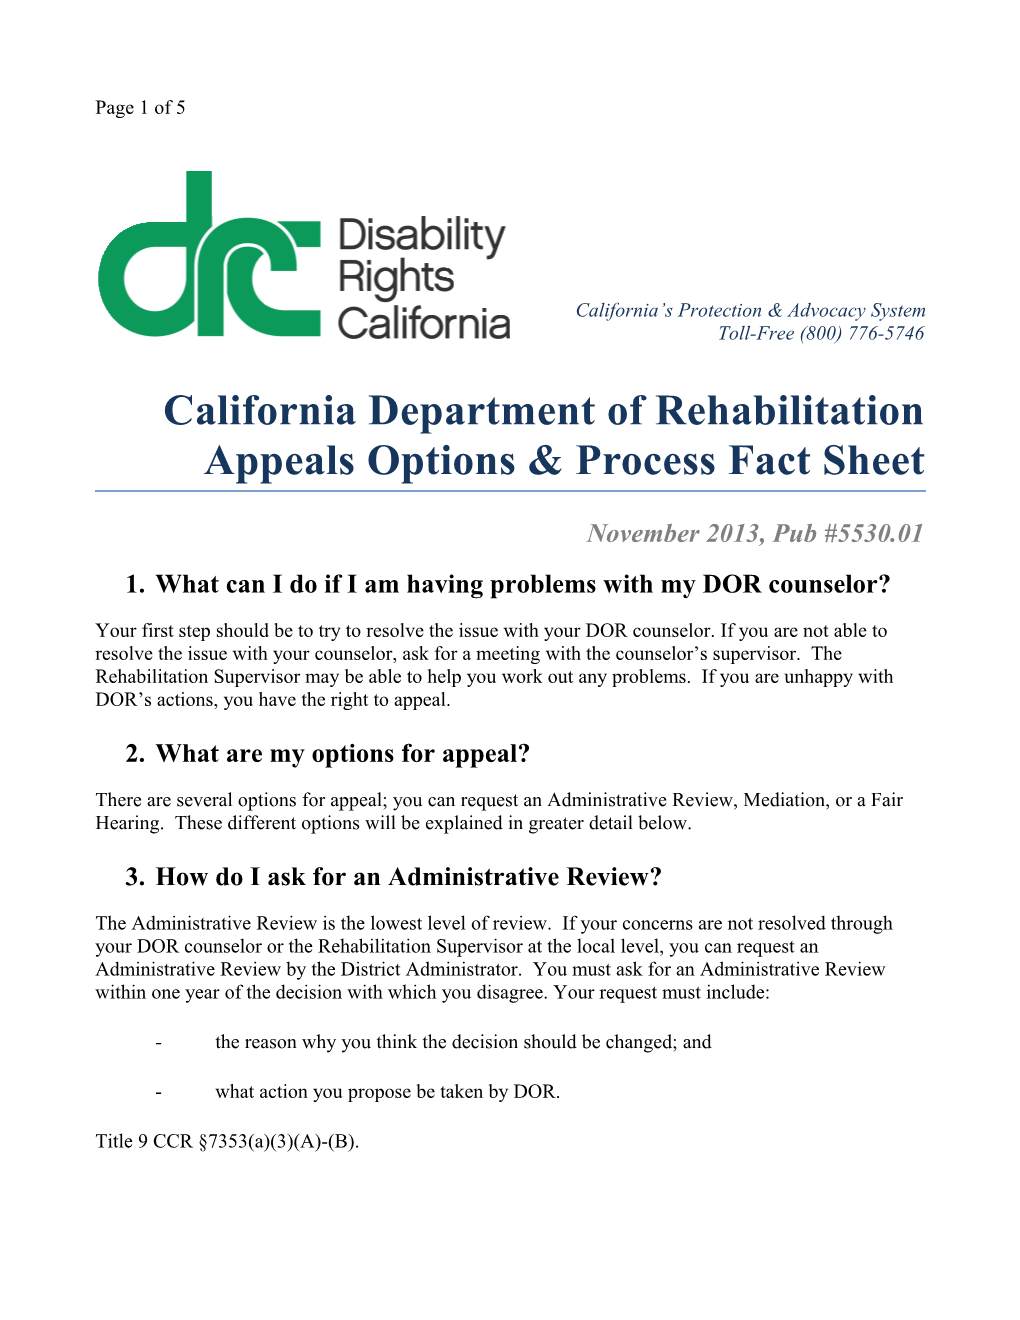 California Department of Rehabilitation Appeals Options & Process Fact Sheet